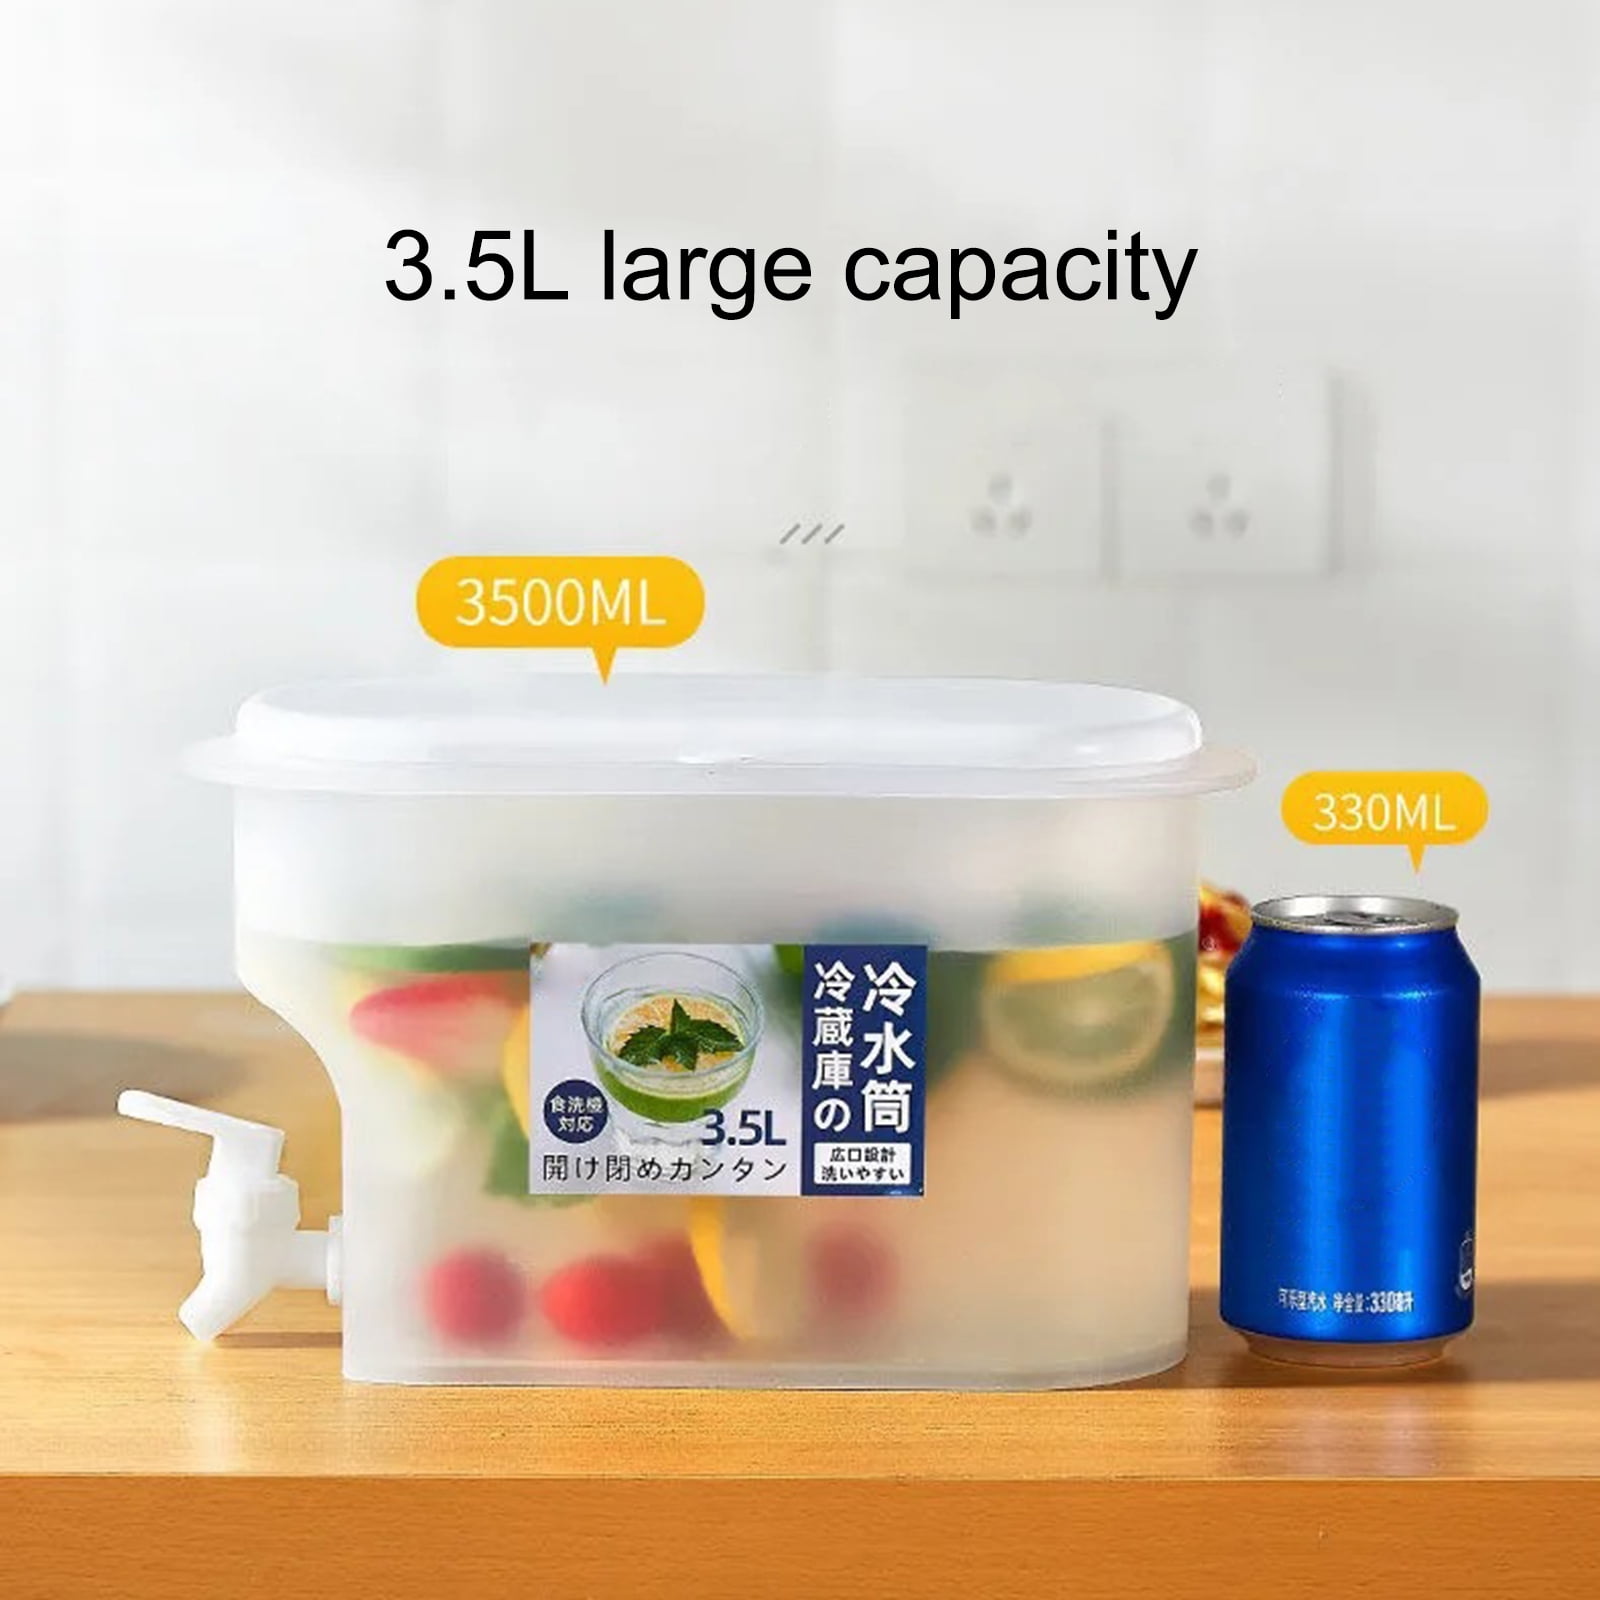 VAIPI Drink Dispenser for Fridge 1 Gallon Plastic Beverage